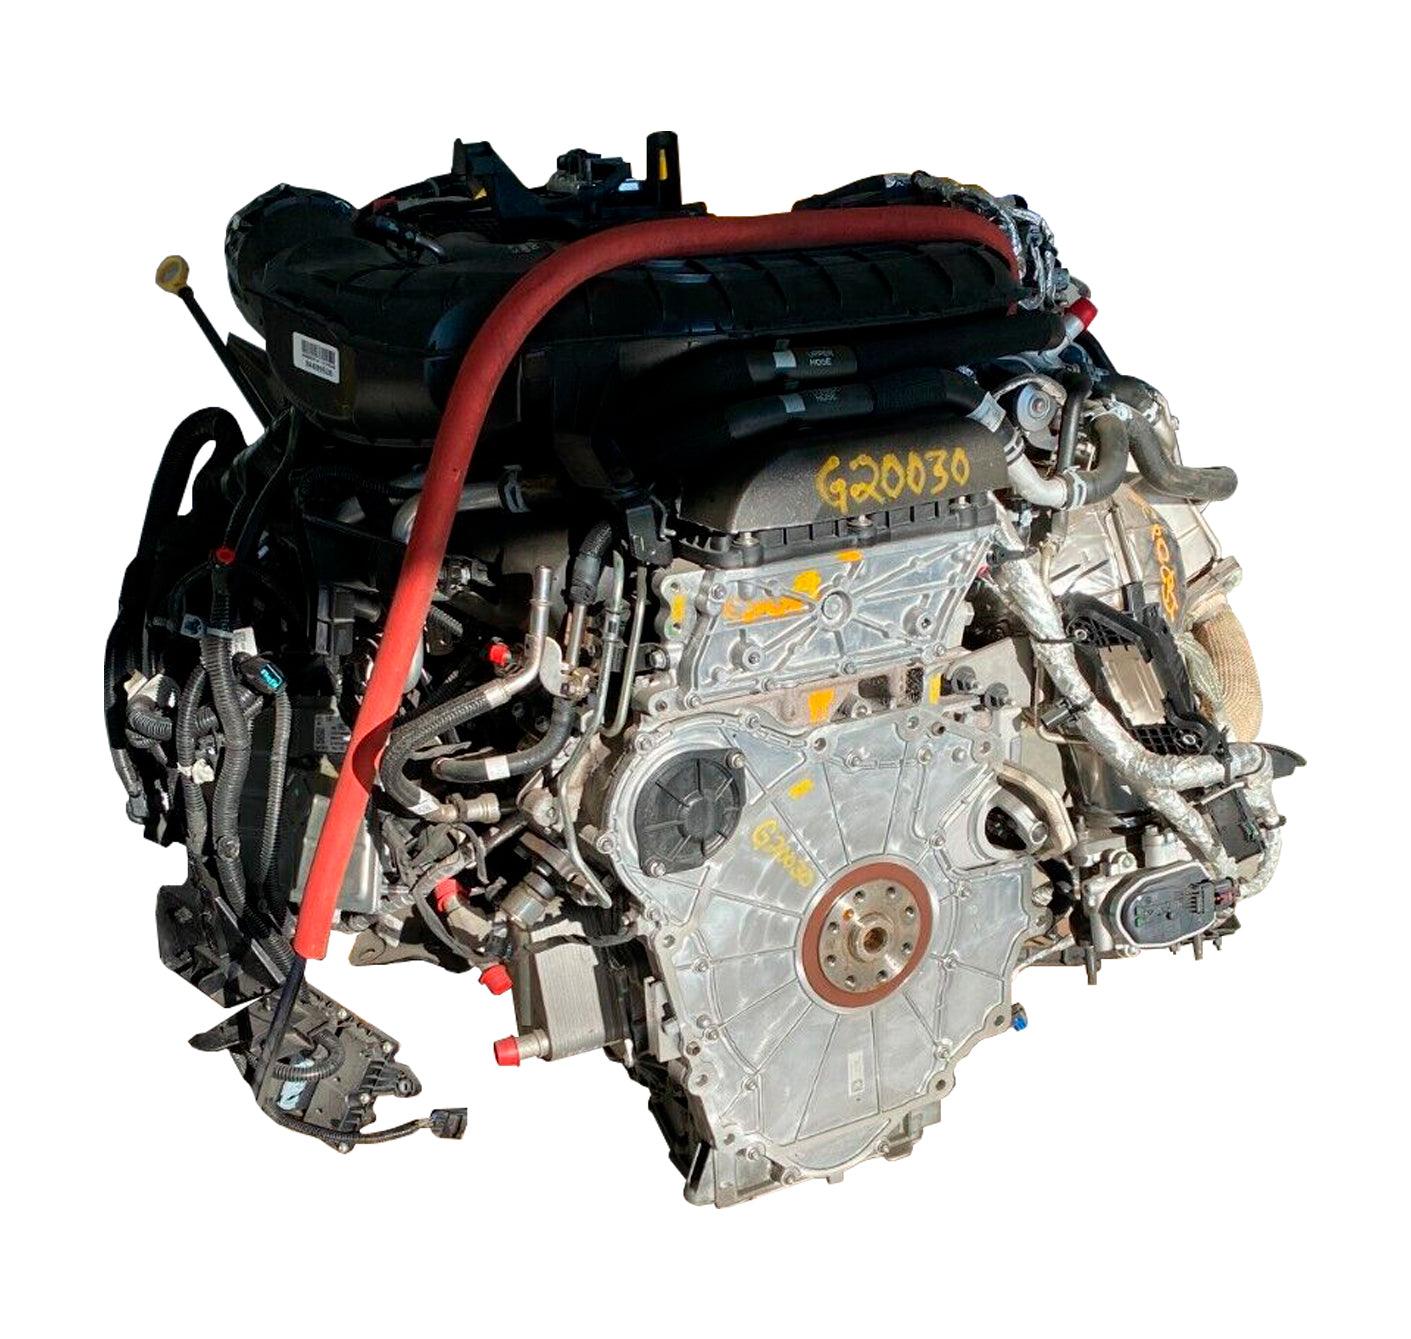 12729055 Genuine Gm Diesel Engine Lm2 3.0L L6 For Silverado Sierra Escalade - ADVANCED TRUCK PARTS